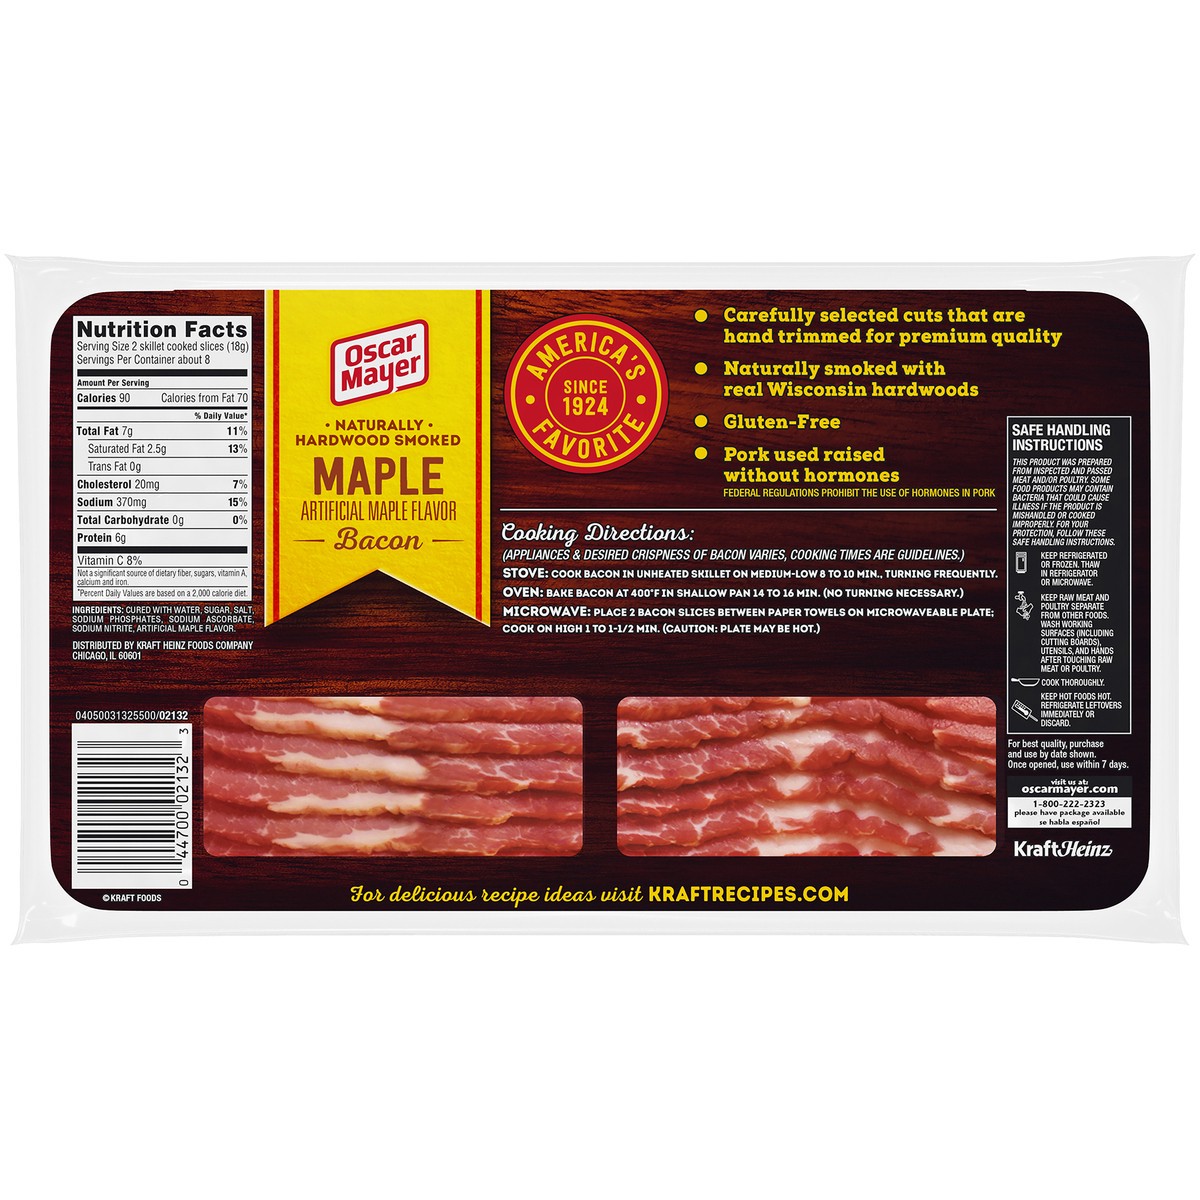 slide 2 of 8, Oscar Mayer Naturally Hardwood Smoked Maple Bacon, 16 oz Pack, 15-17 slices, 16 oz